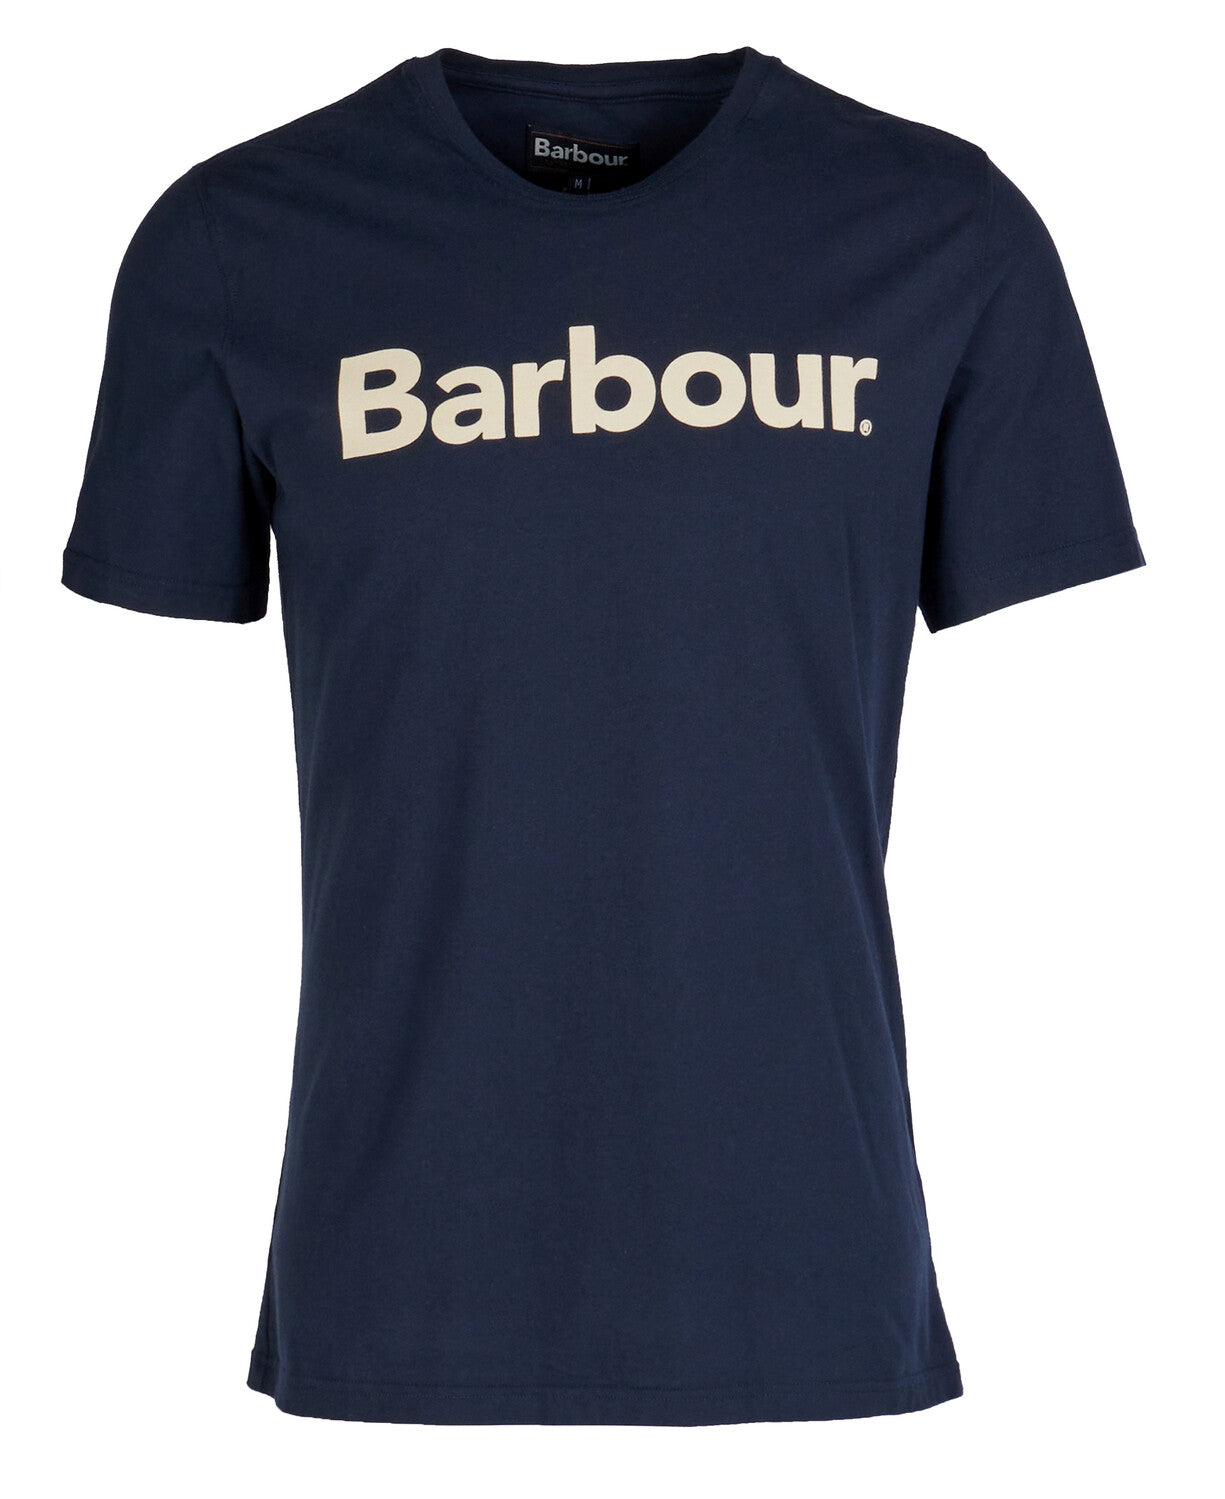 Barbour Logo T-Shirt